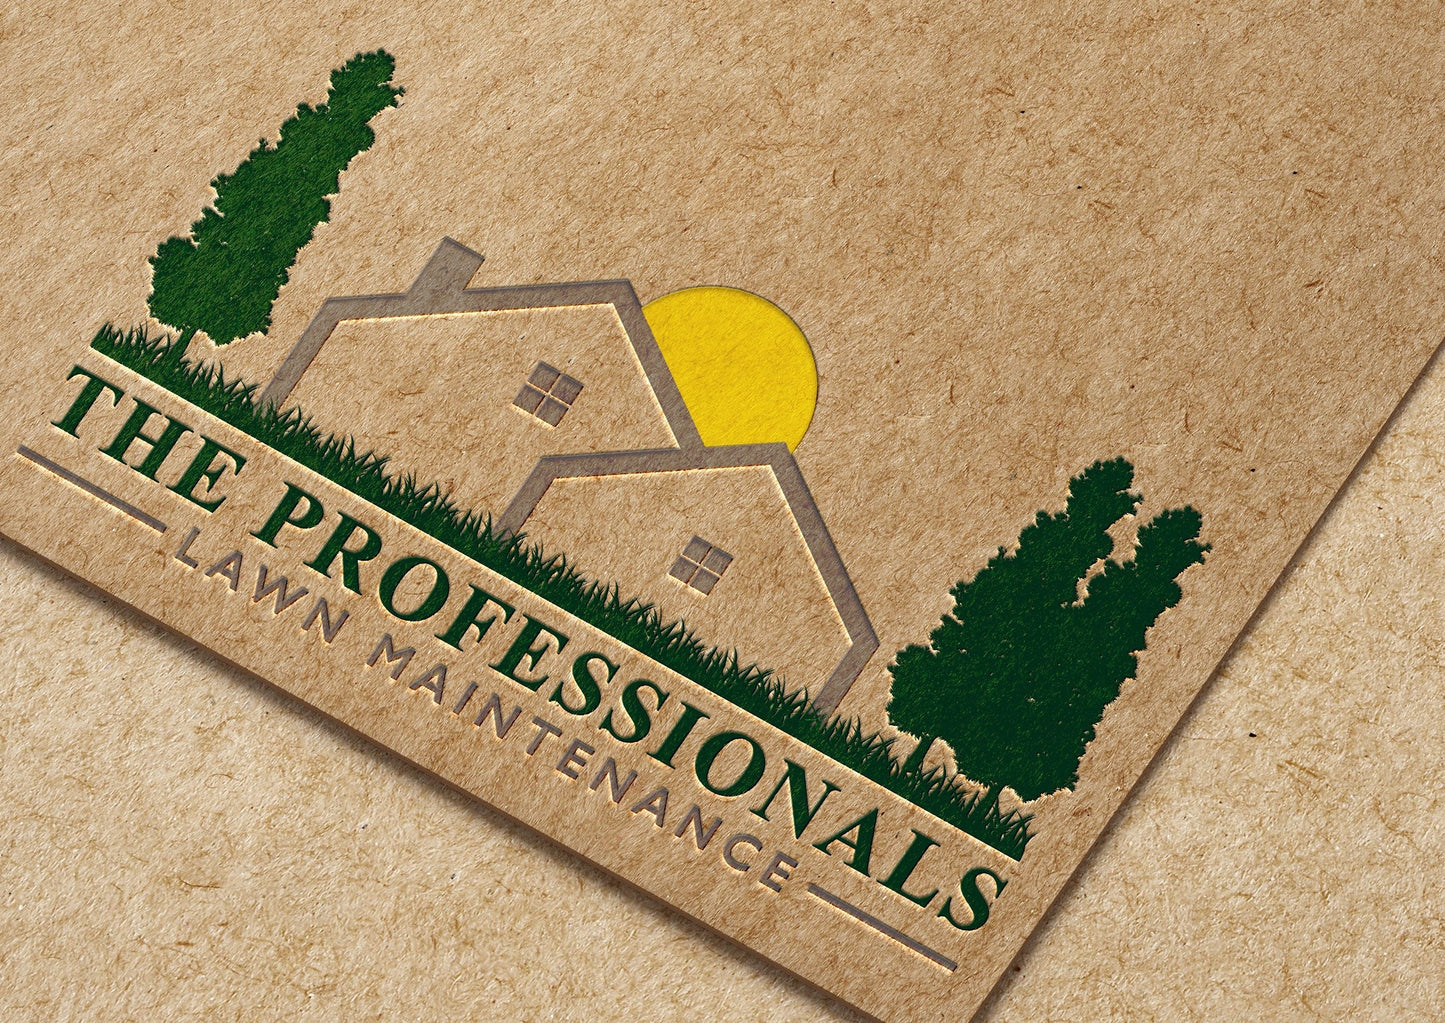 Landscaping Logo Design | Professional Landscaping | Landscaping Business | Lawn Care Business | Company | Lawn Maintenance Logo